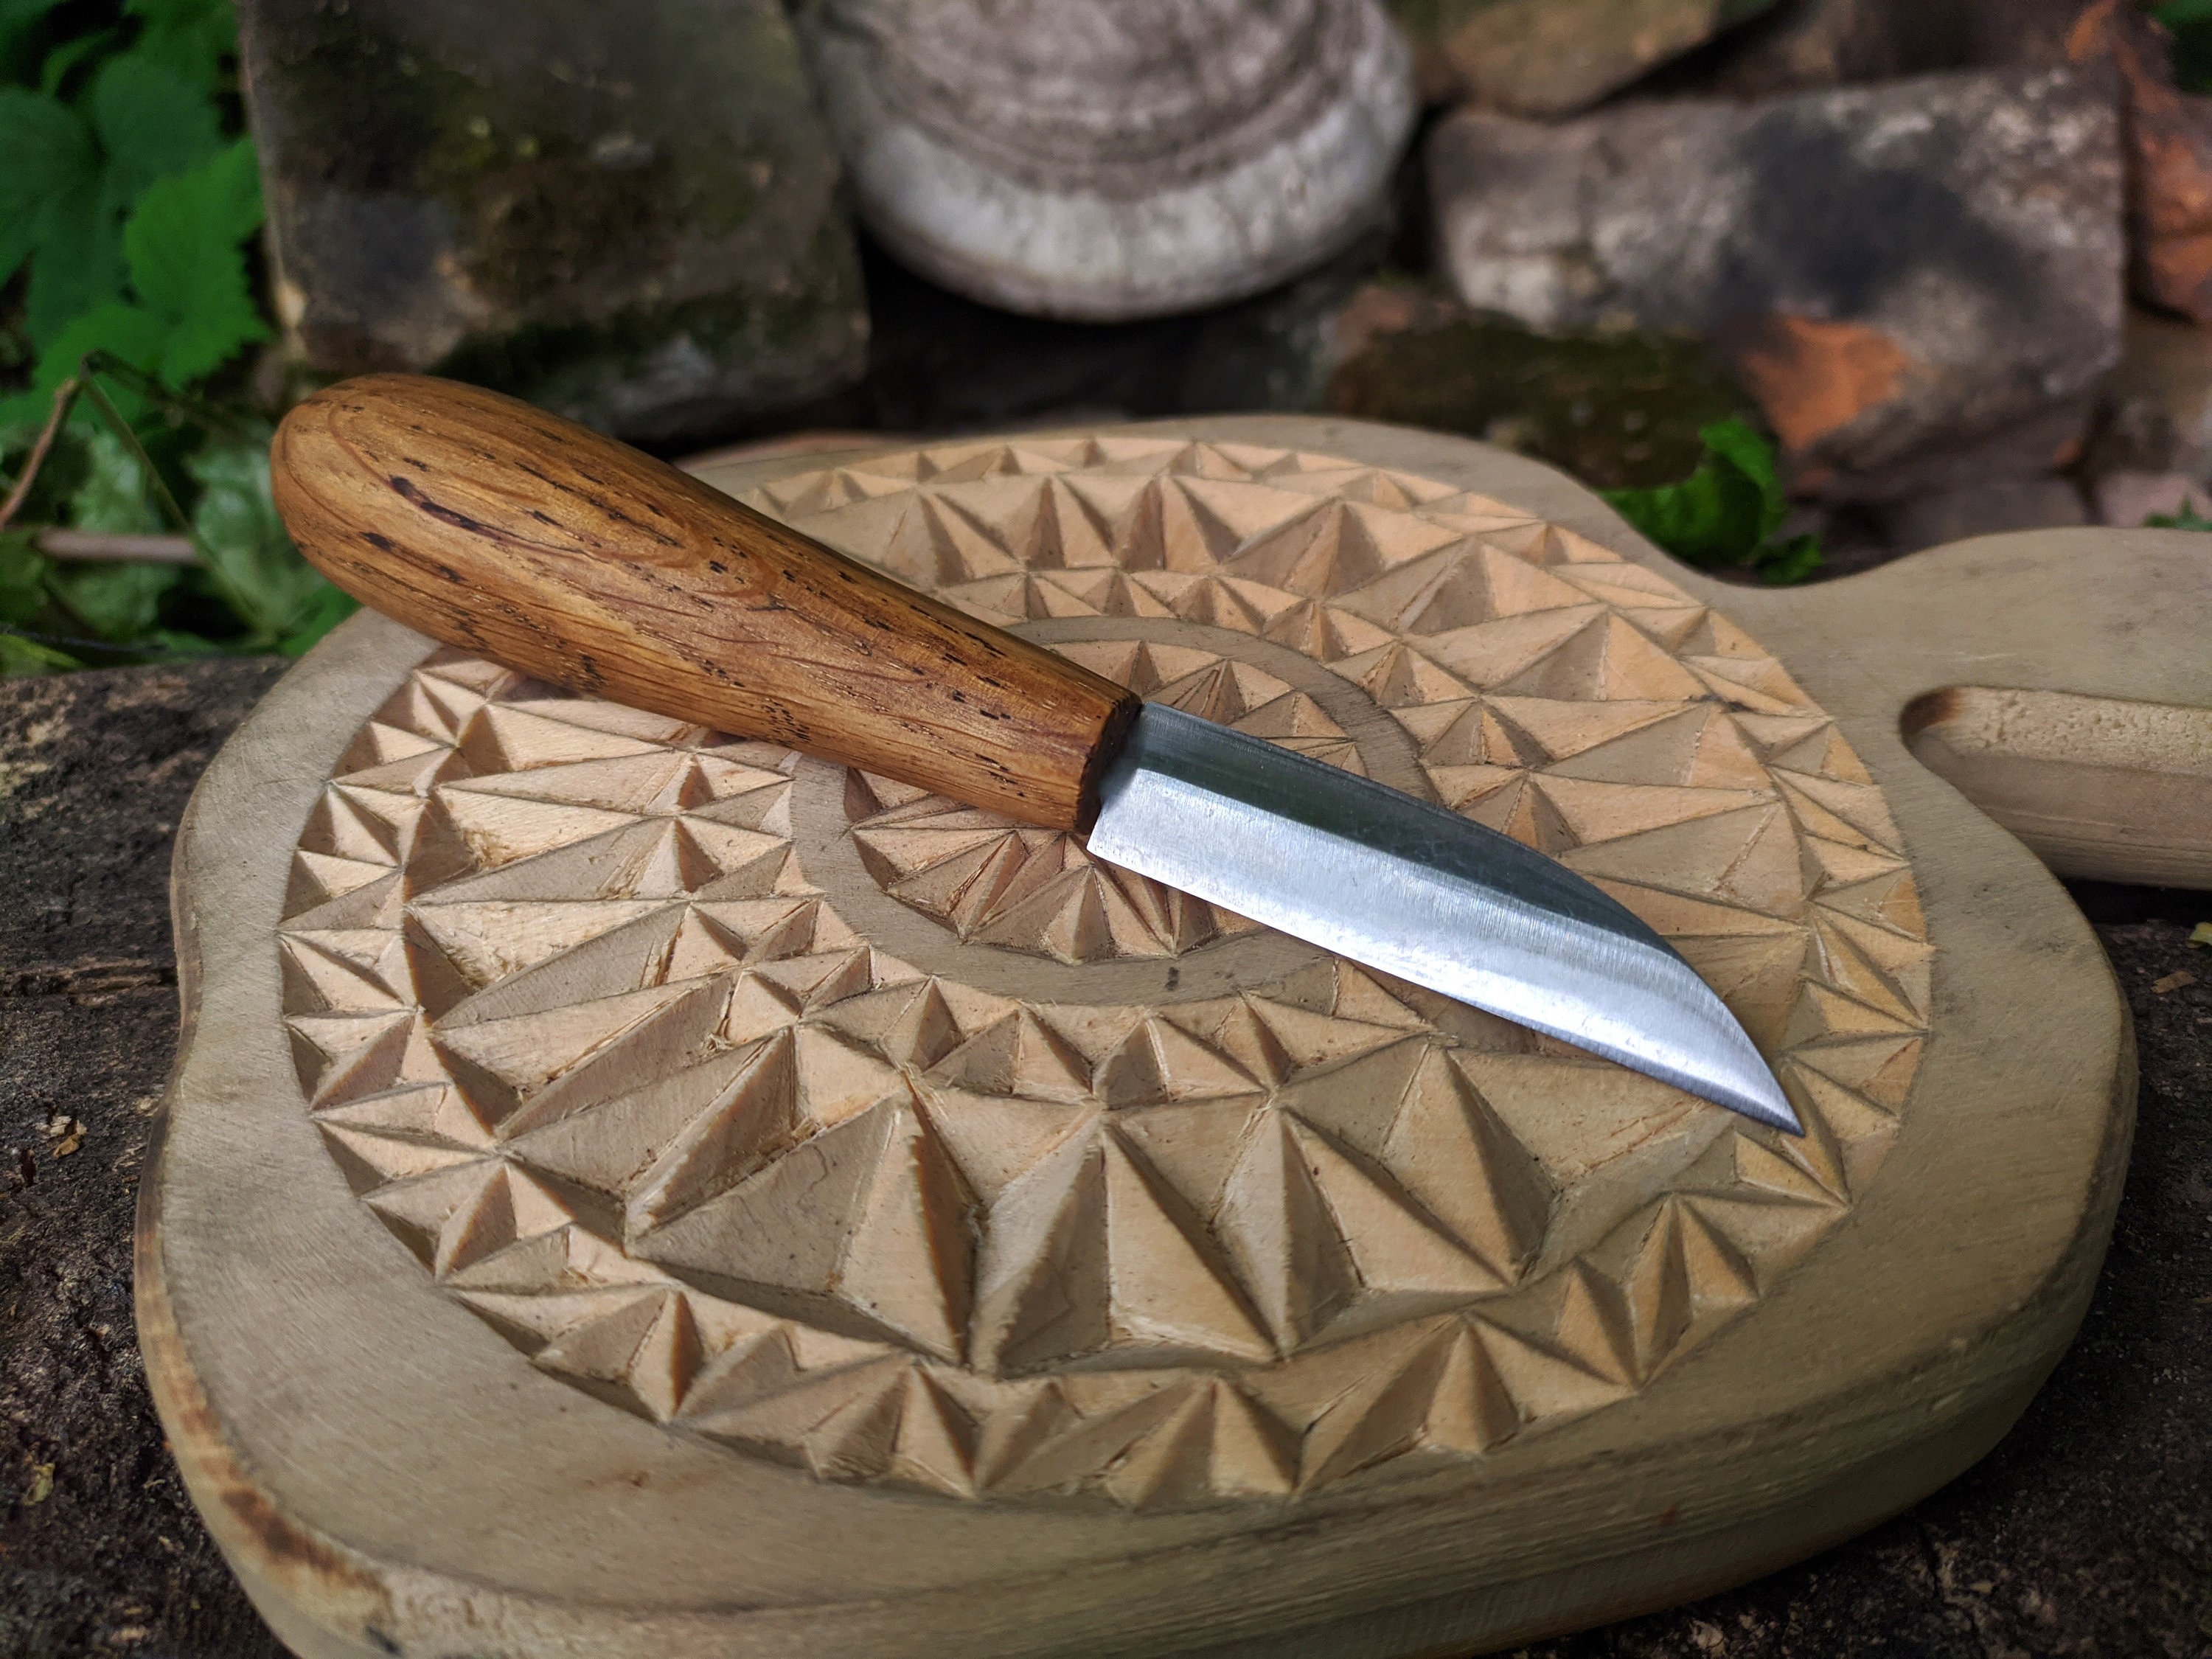 Wood Carving Knife. Carving Knife. Chip Carving Knife. Forged Knife.  Handmade Tool. Whittling Knife. Wood Carving Tools. Helvie Knife. Sloyd -   Denmark